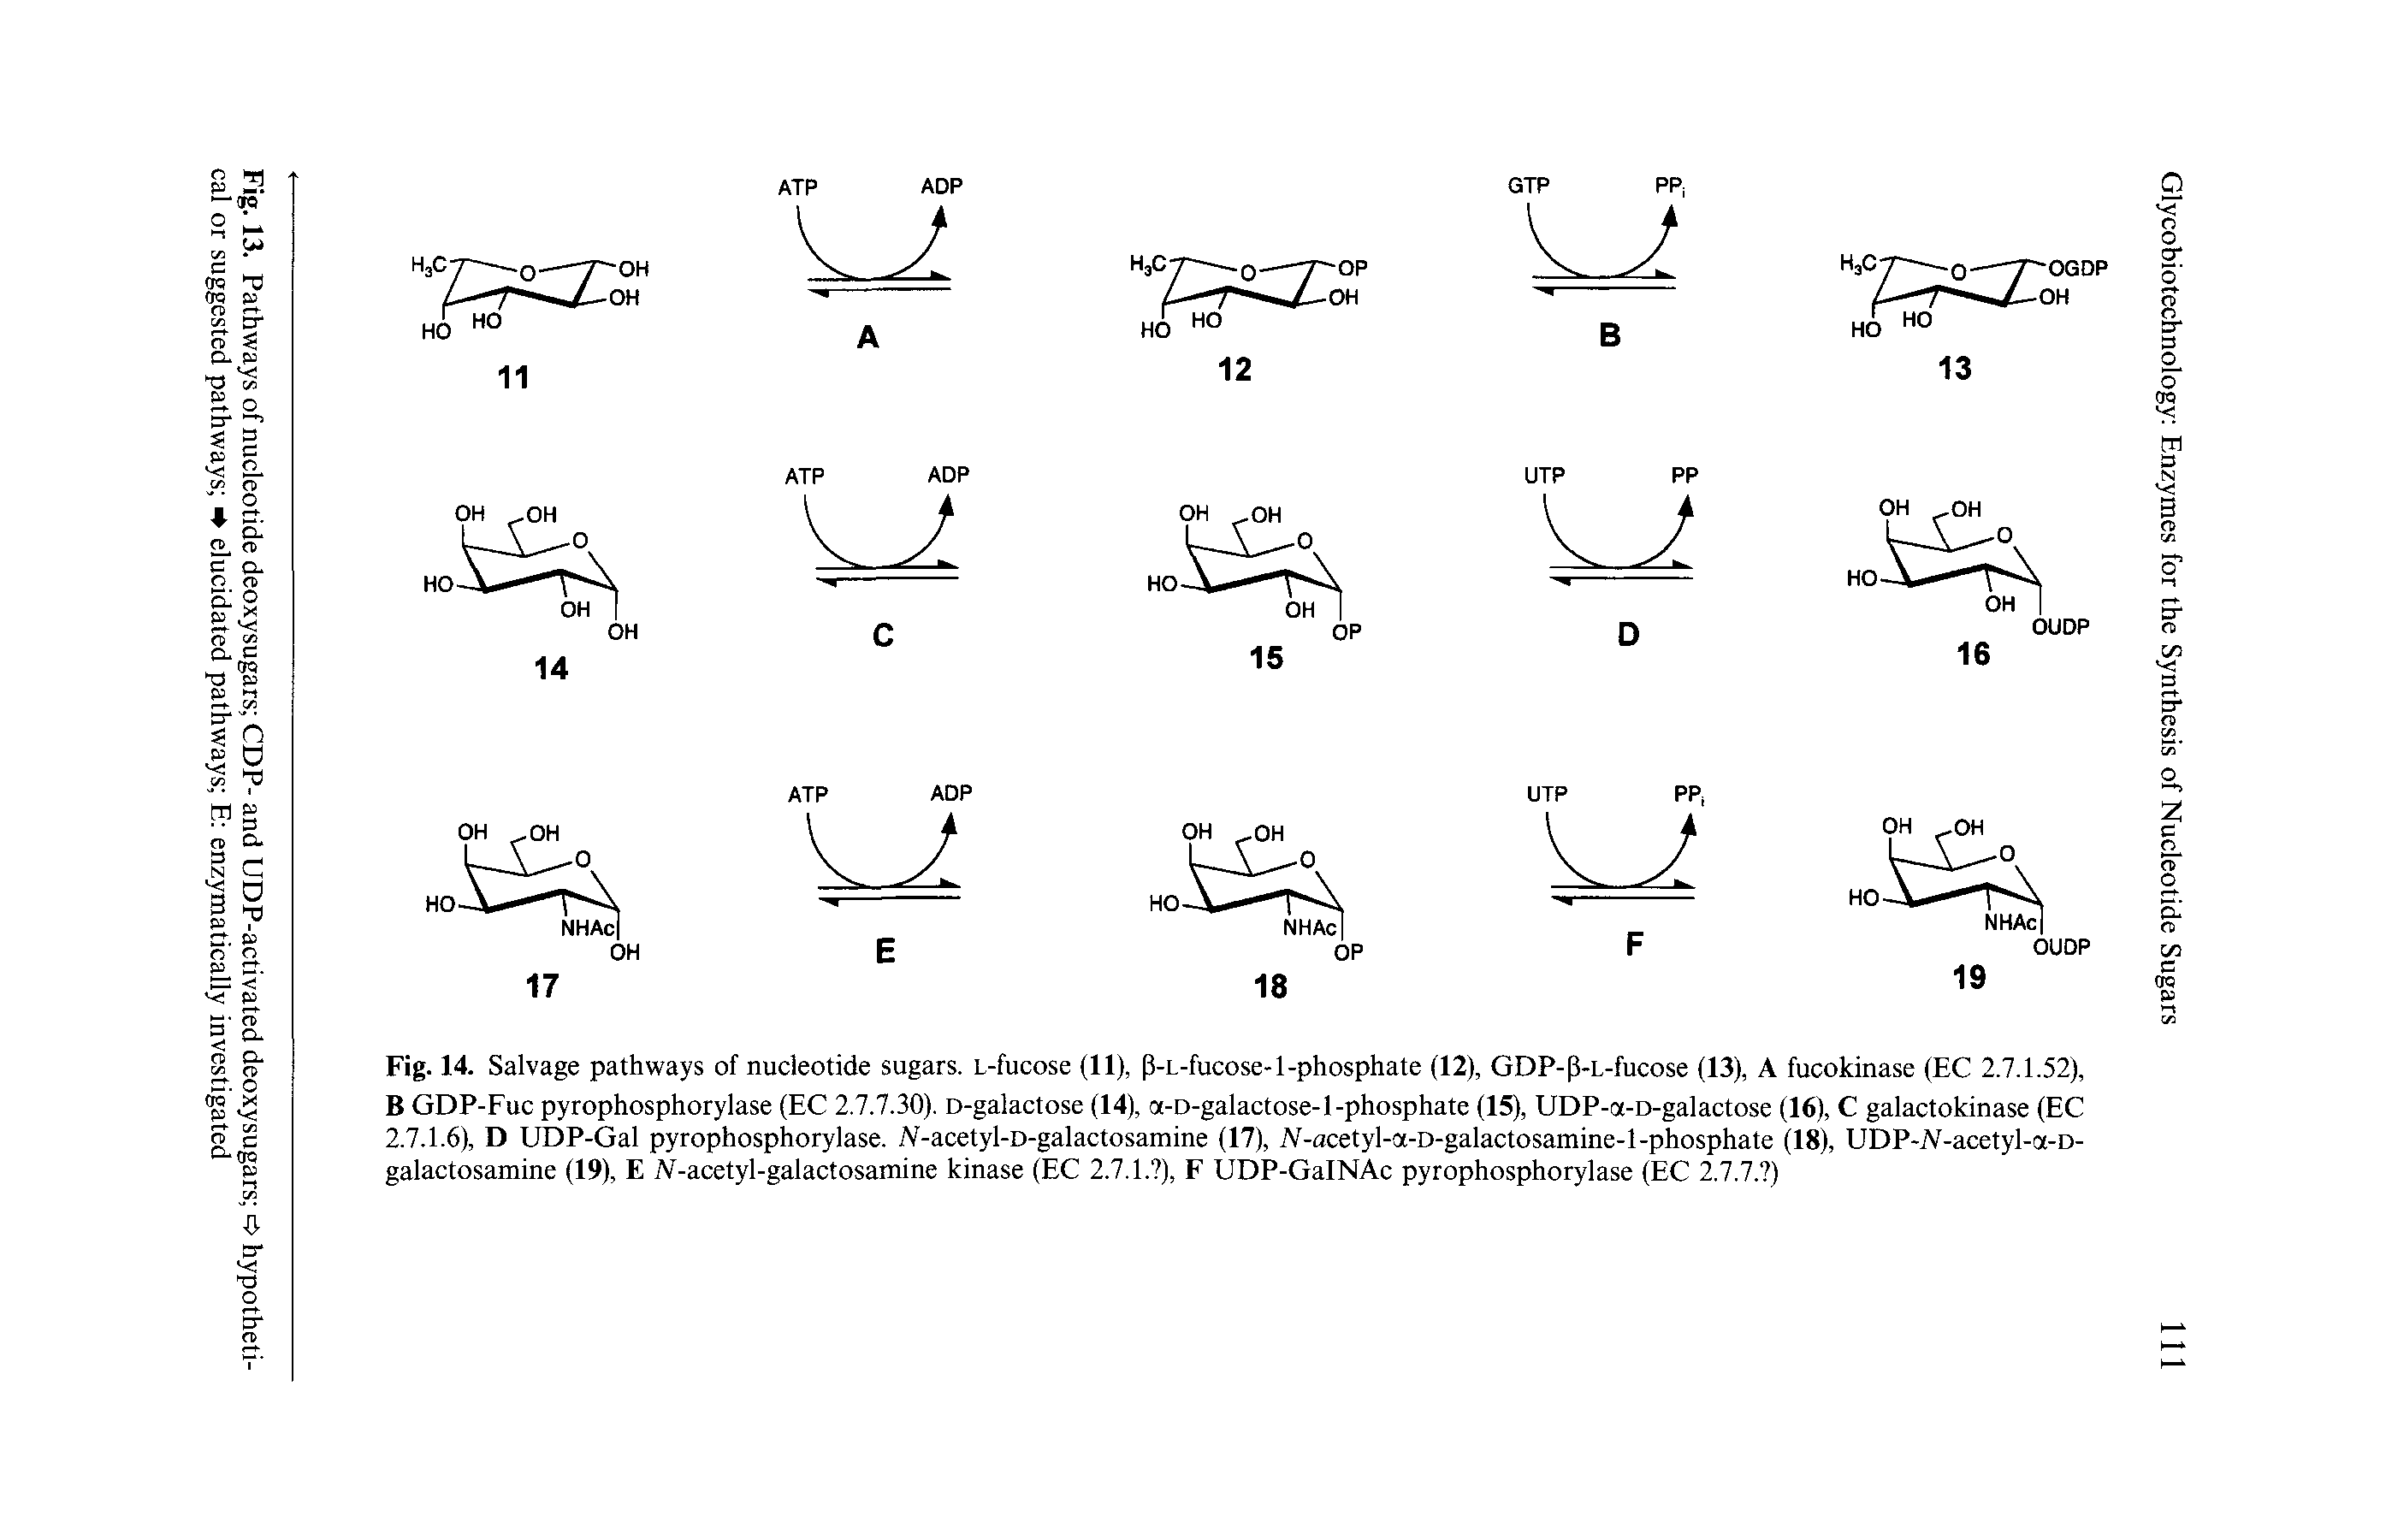 Fig. 14. Salvage pathways of nucleotide sugars. L-fucose (11), (3-L-fucose-l-phosphate (12), GDP-p-L-fucose (13), A fucokinase (EC 2.7.1.52), B GDP-Fuc pyrophosphorylase (EC 2.7.7.30). D-galactose (14), a-D-galactose-l-phosphate (15), UDP-a-D-galactose (16), C galactokinase (EC 2.7.1.6), D UDP-Gal pyrophosphorylase. IV-acetyl-D-galactosamine (17), Al-acetyl-a-D-galactosamine-l-phosphate (18), UDP-lV-acetyl-a-D-galactosamine (19), E IV-acetyl-galactosamine kinase (EC 2.7.1. ), F UDP-GalNAc pyrophosphorylase (EC 2.7.7. )...